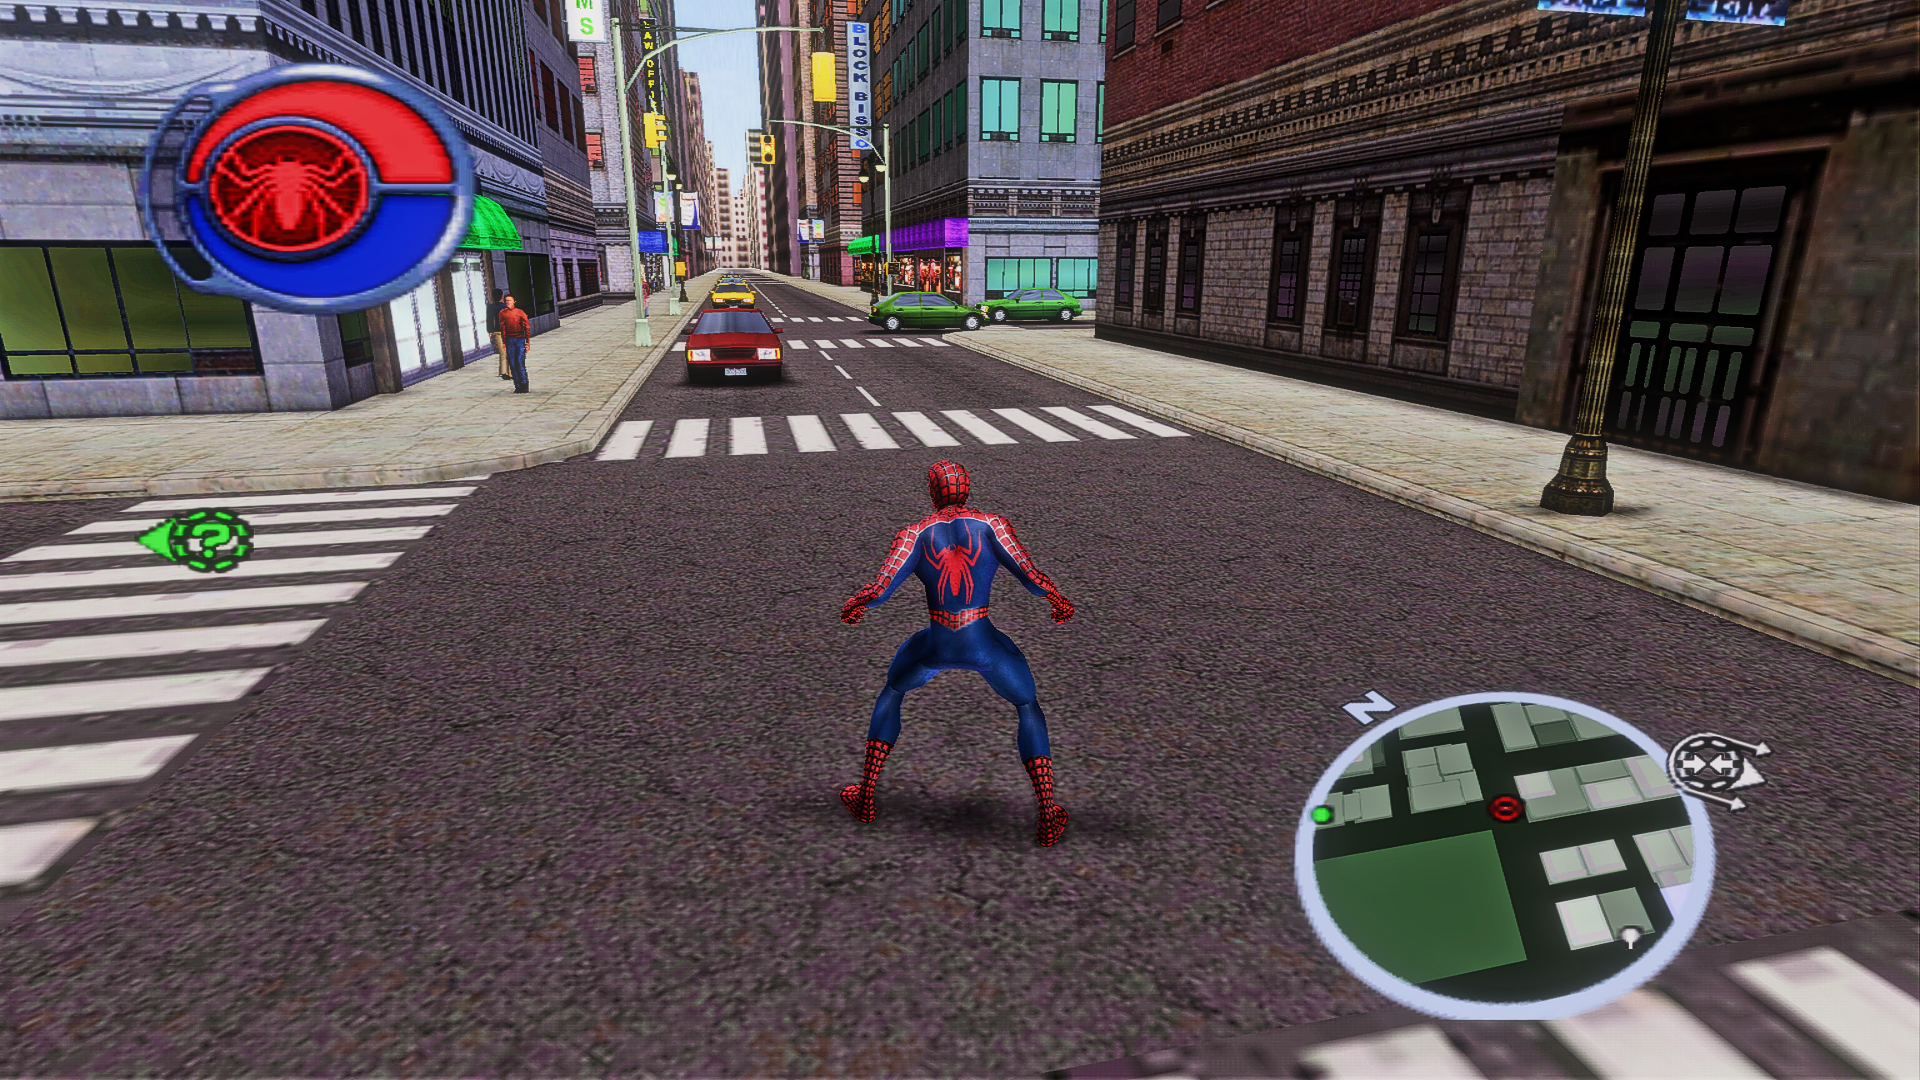 Spiderman 2 Free Download PC Game Full Version